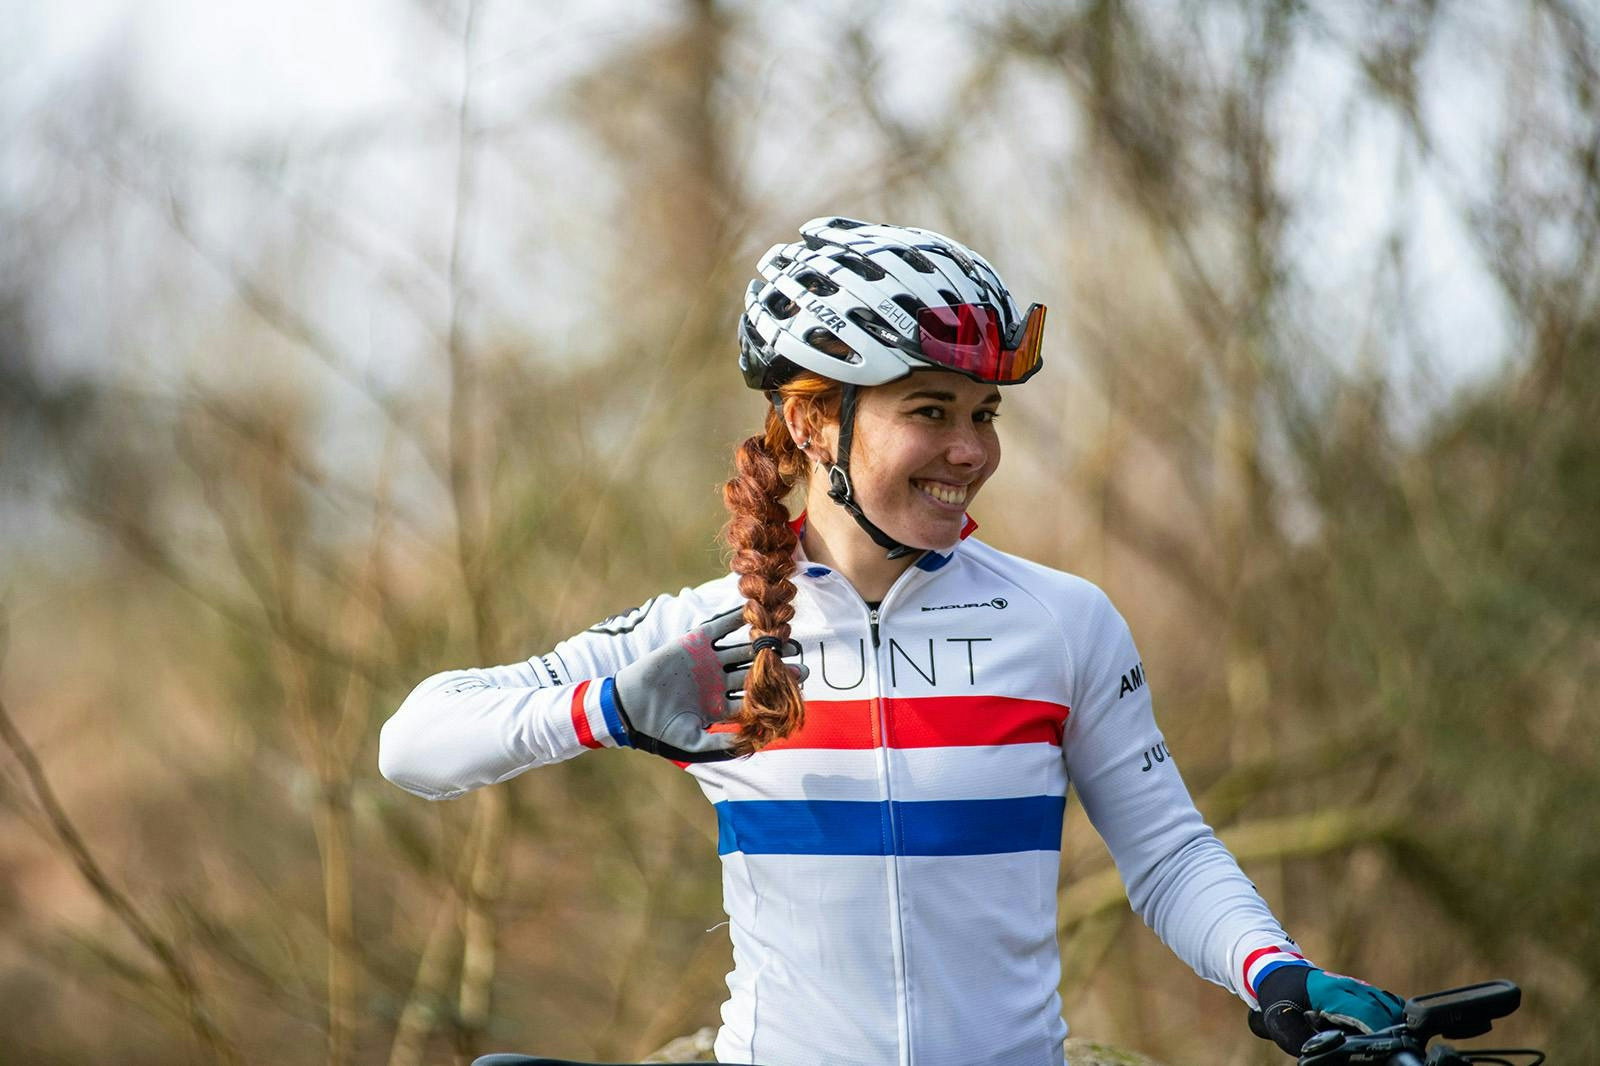 Juliana Bicycles Pro XC Athlete: Isla Short posing for the camera